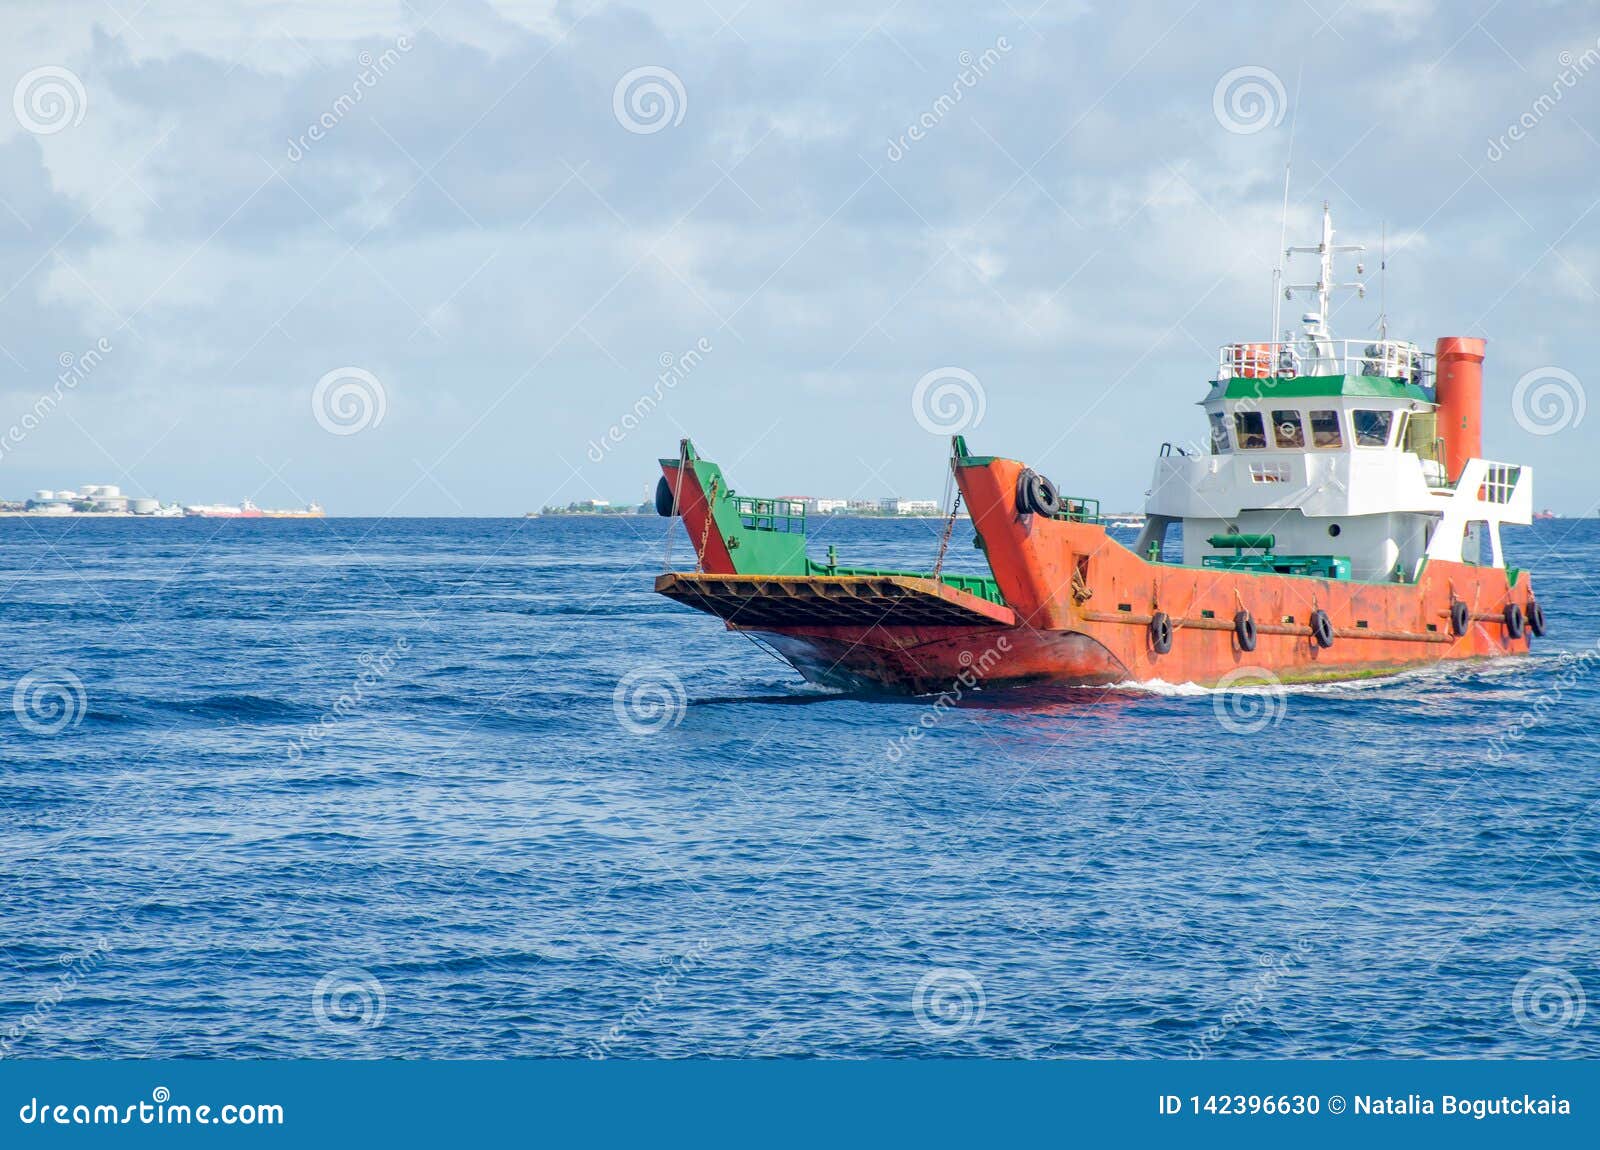 the cargoship in the indian ocean maldives